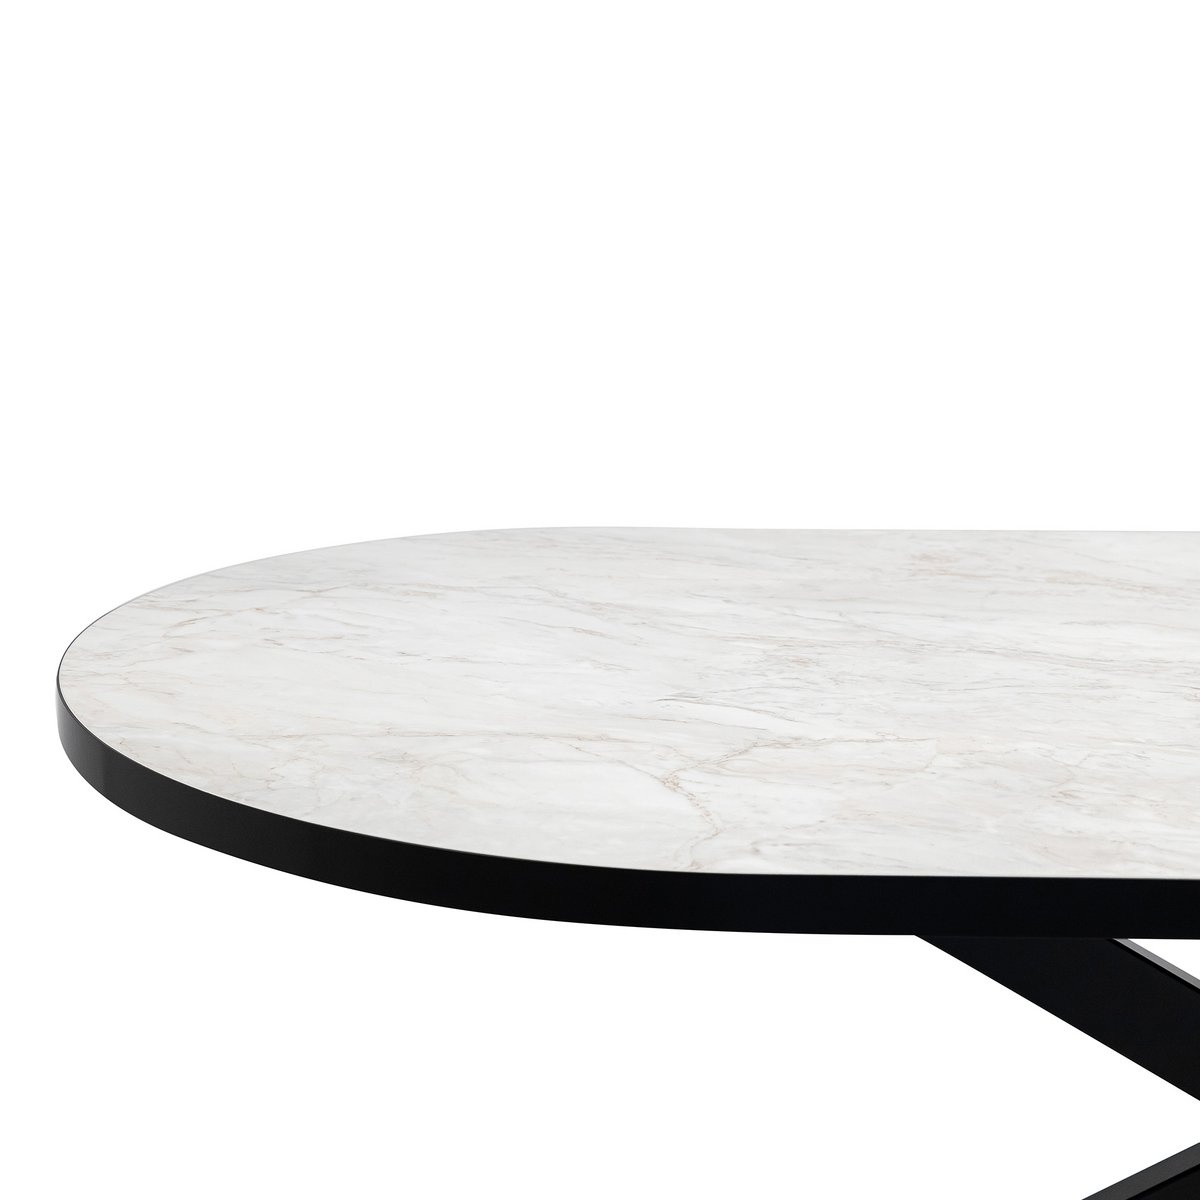 KantoormeubelenPlus Stalux Plat ovale eettafel 'Noud' 210 x 100, kleur zwart / wit marmer